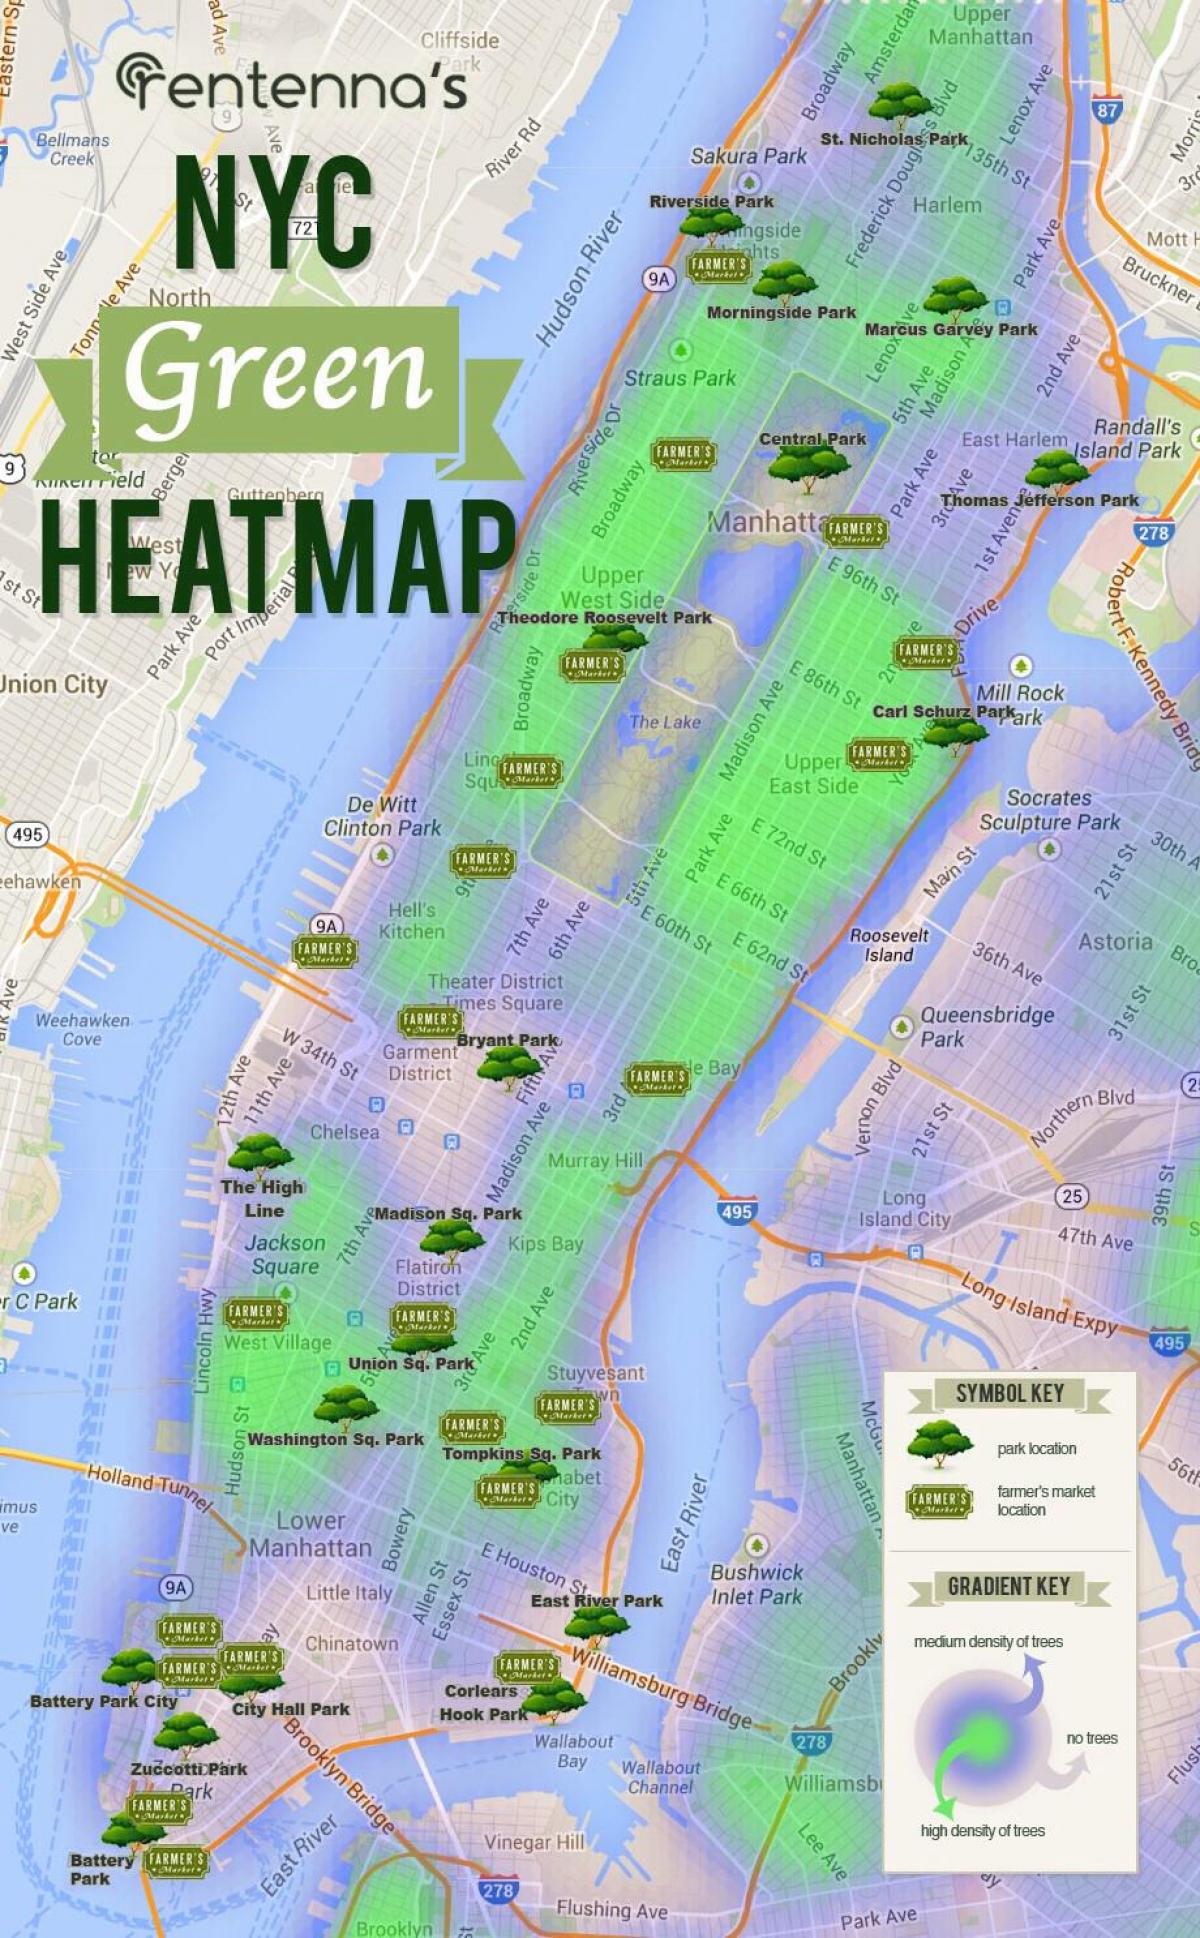 kort over Manhattan parks